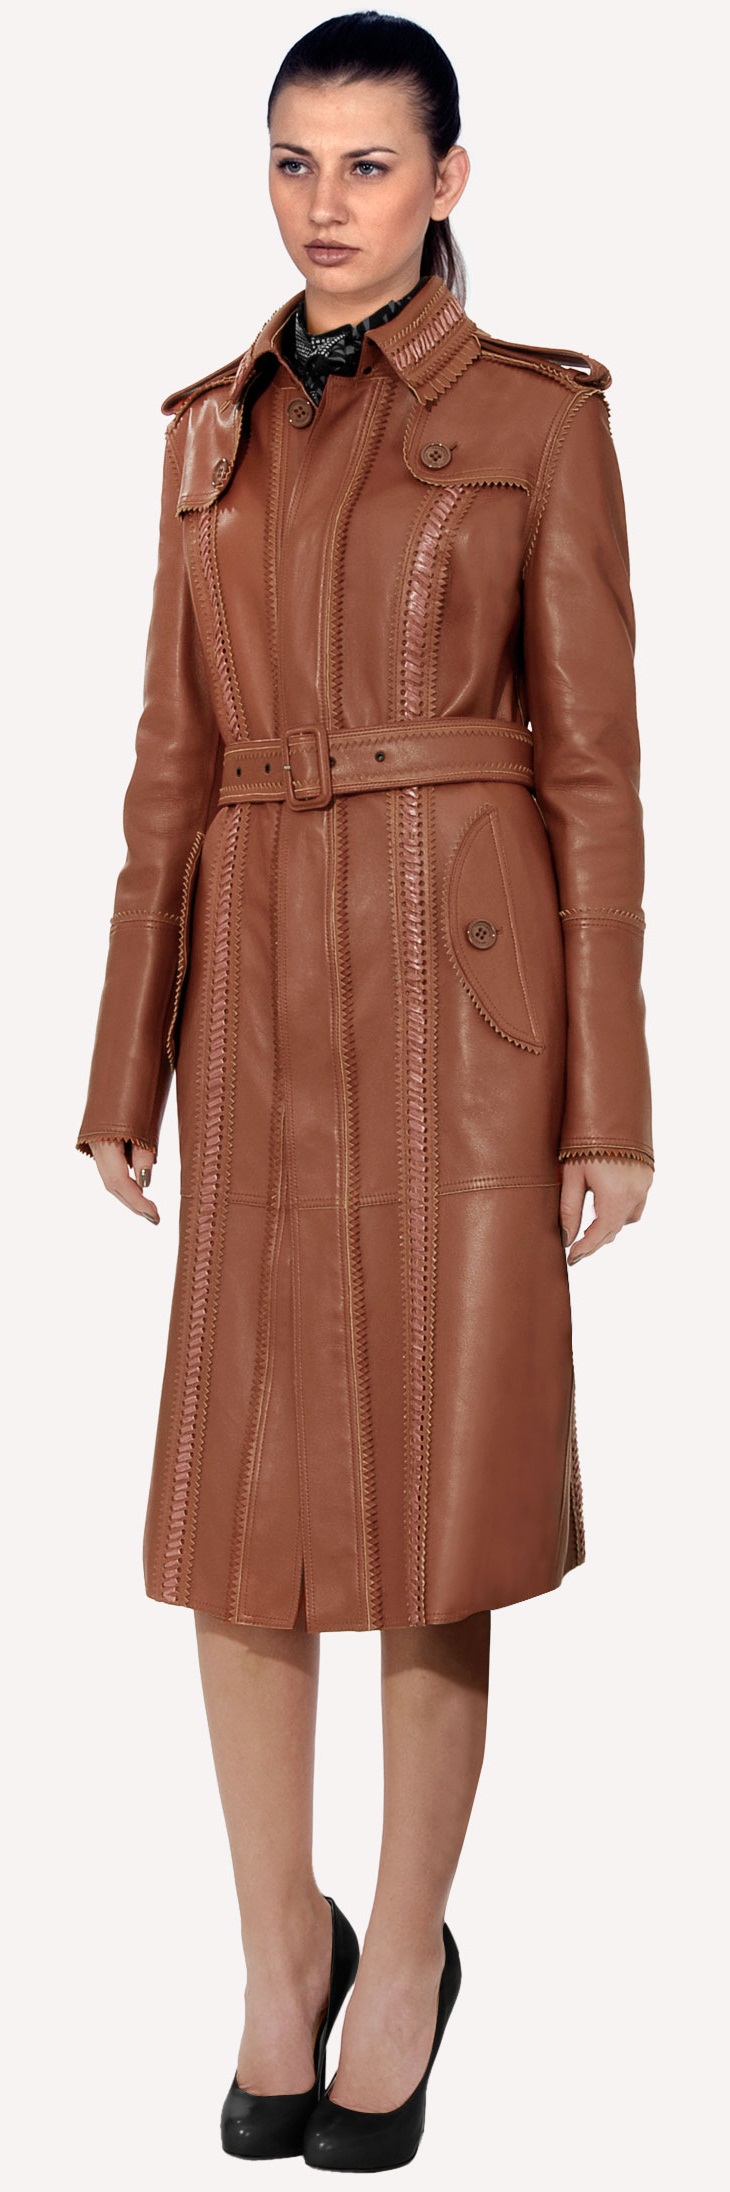 Leather Coats – Stylish and Practical